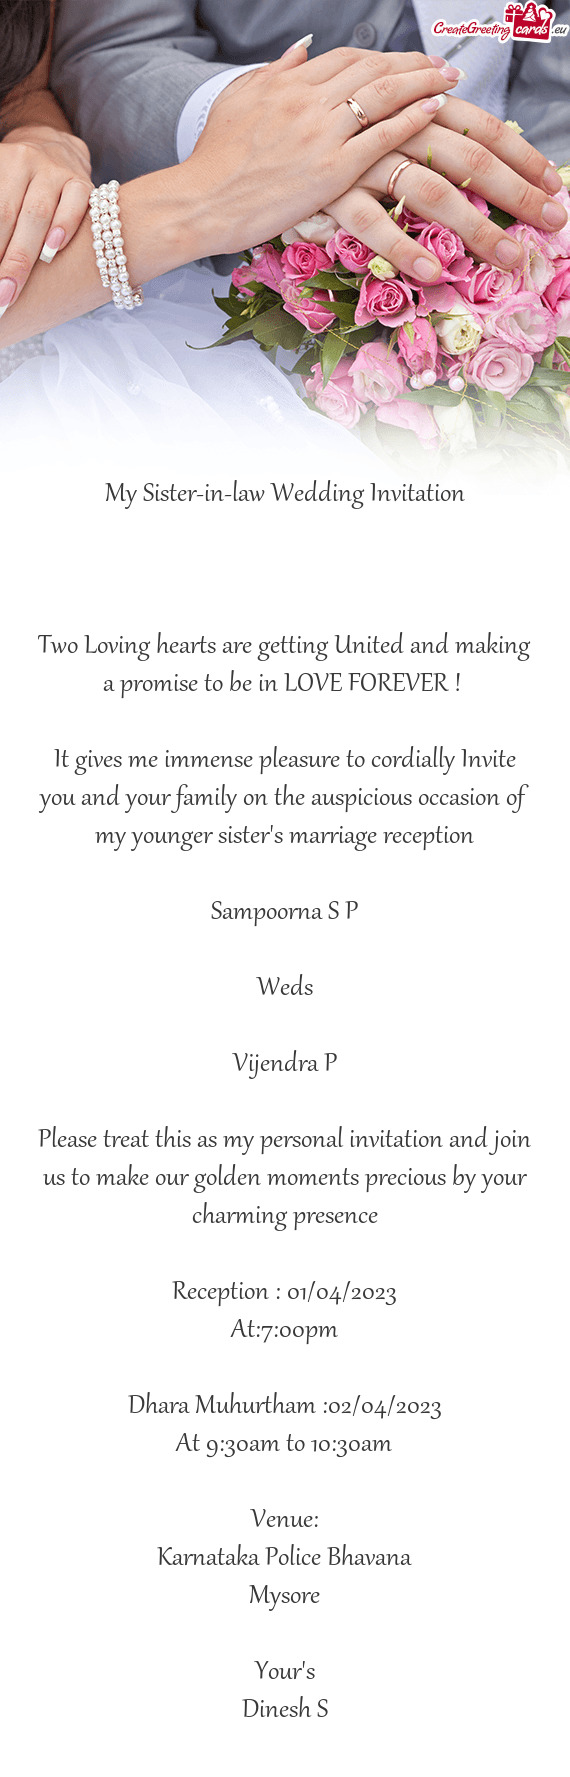 My Sister-in-law Wedding Invitation